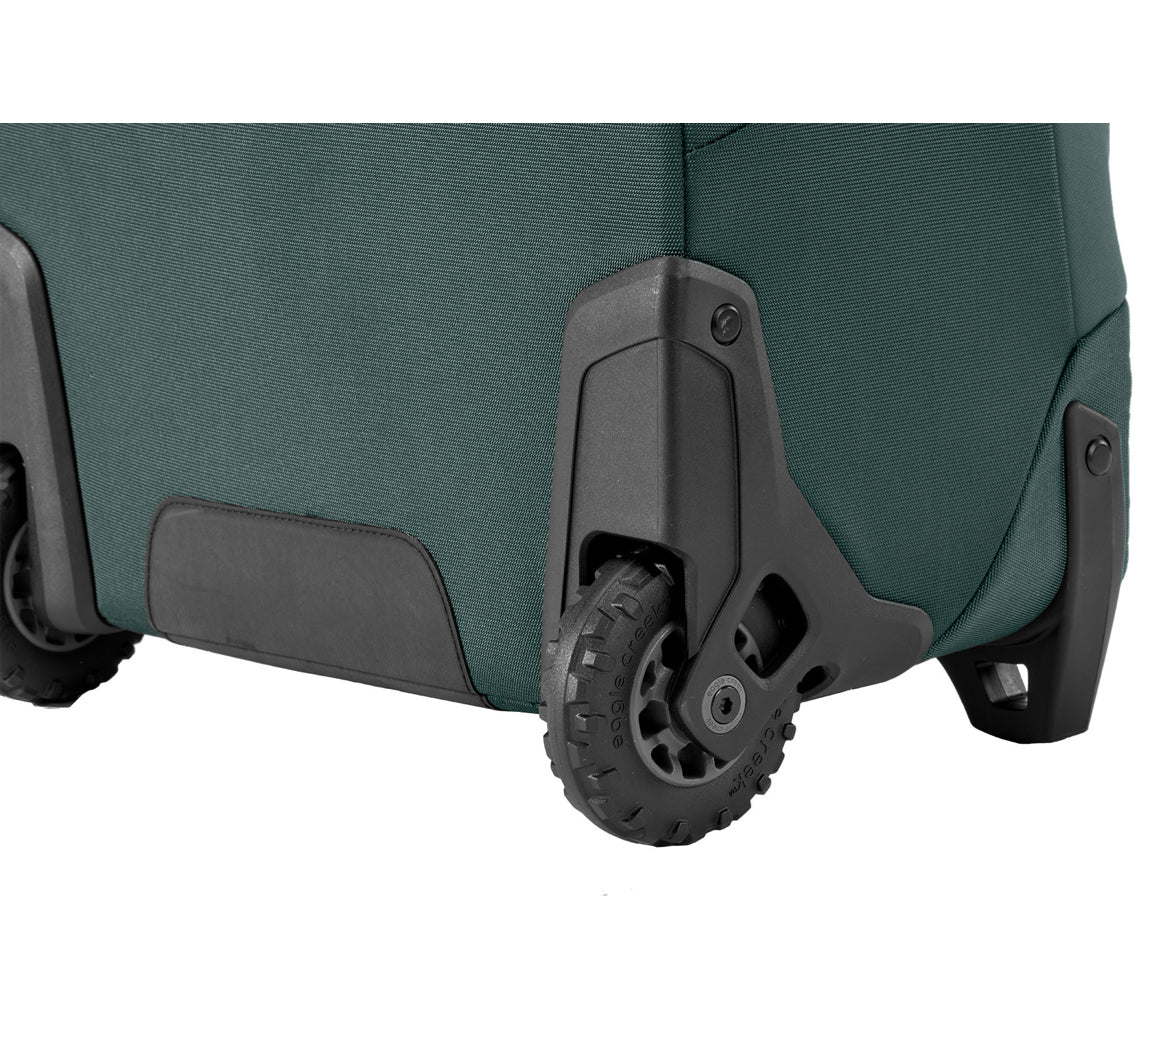 On Sale - Eagle Creek 22” Softside Tarmac XE 40 Liter 2-Wheel Carry-On Bag (Arctic Seagreen)